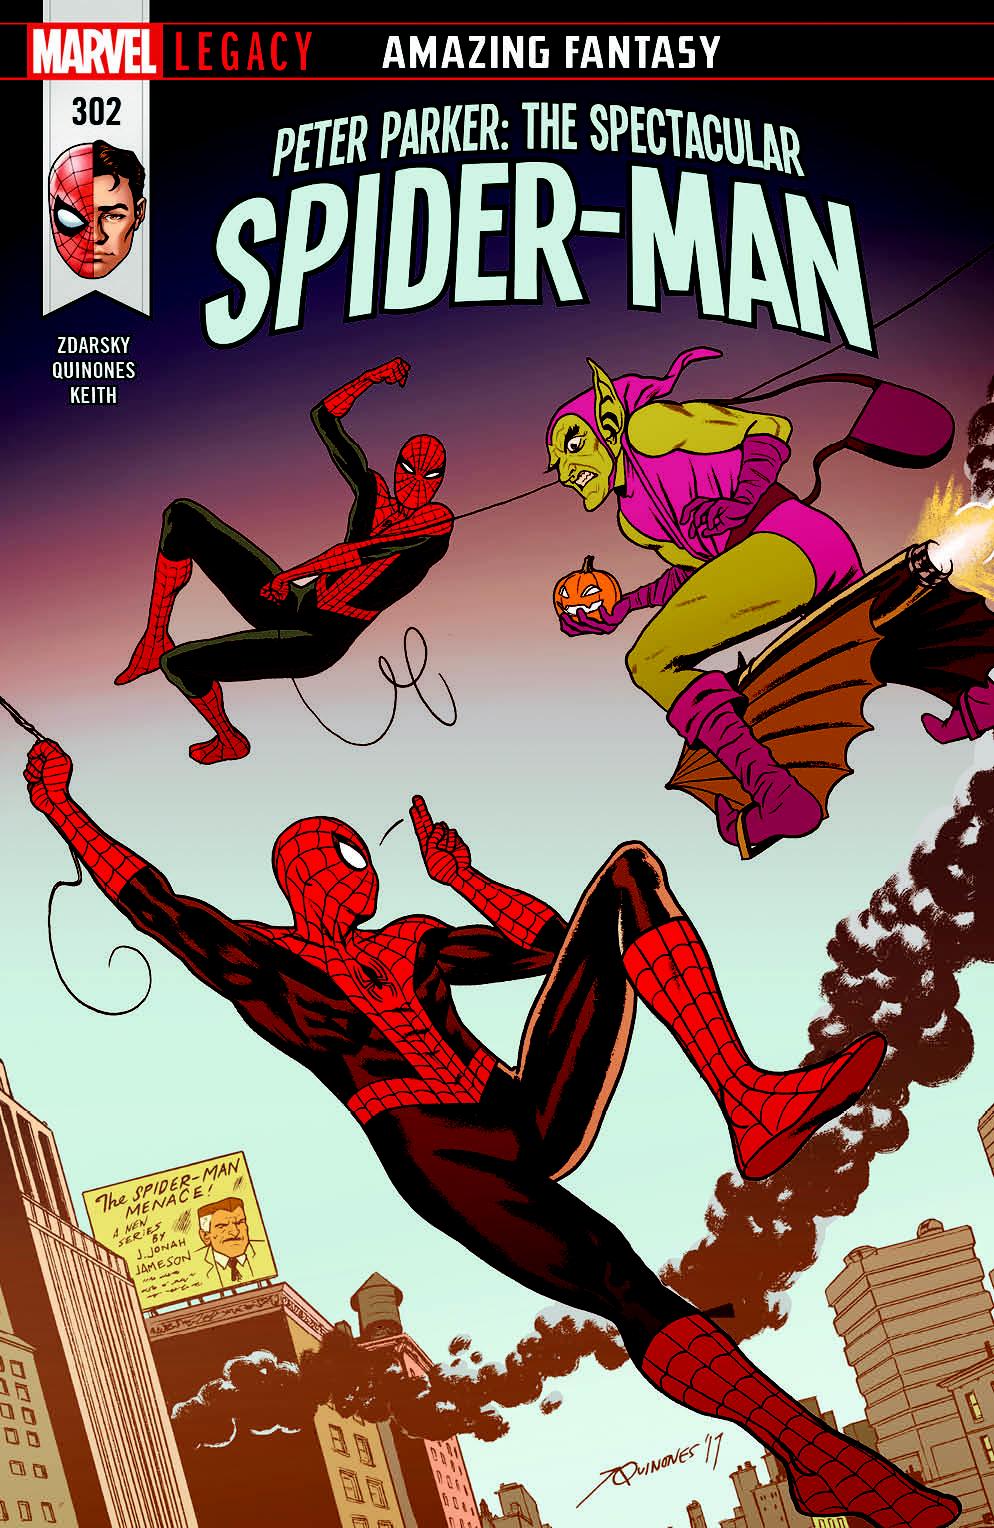 Peter Parker: The Spectacular Spider-Man Vol. 1 #302